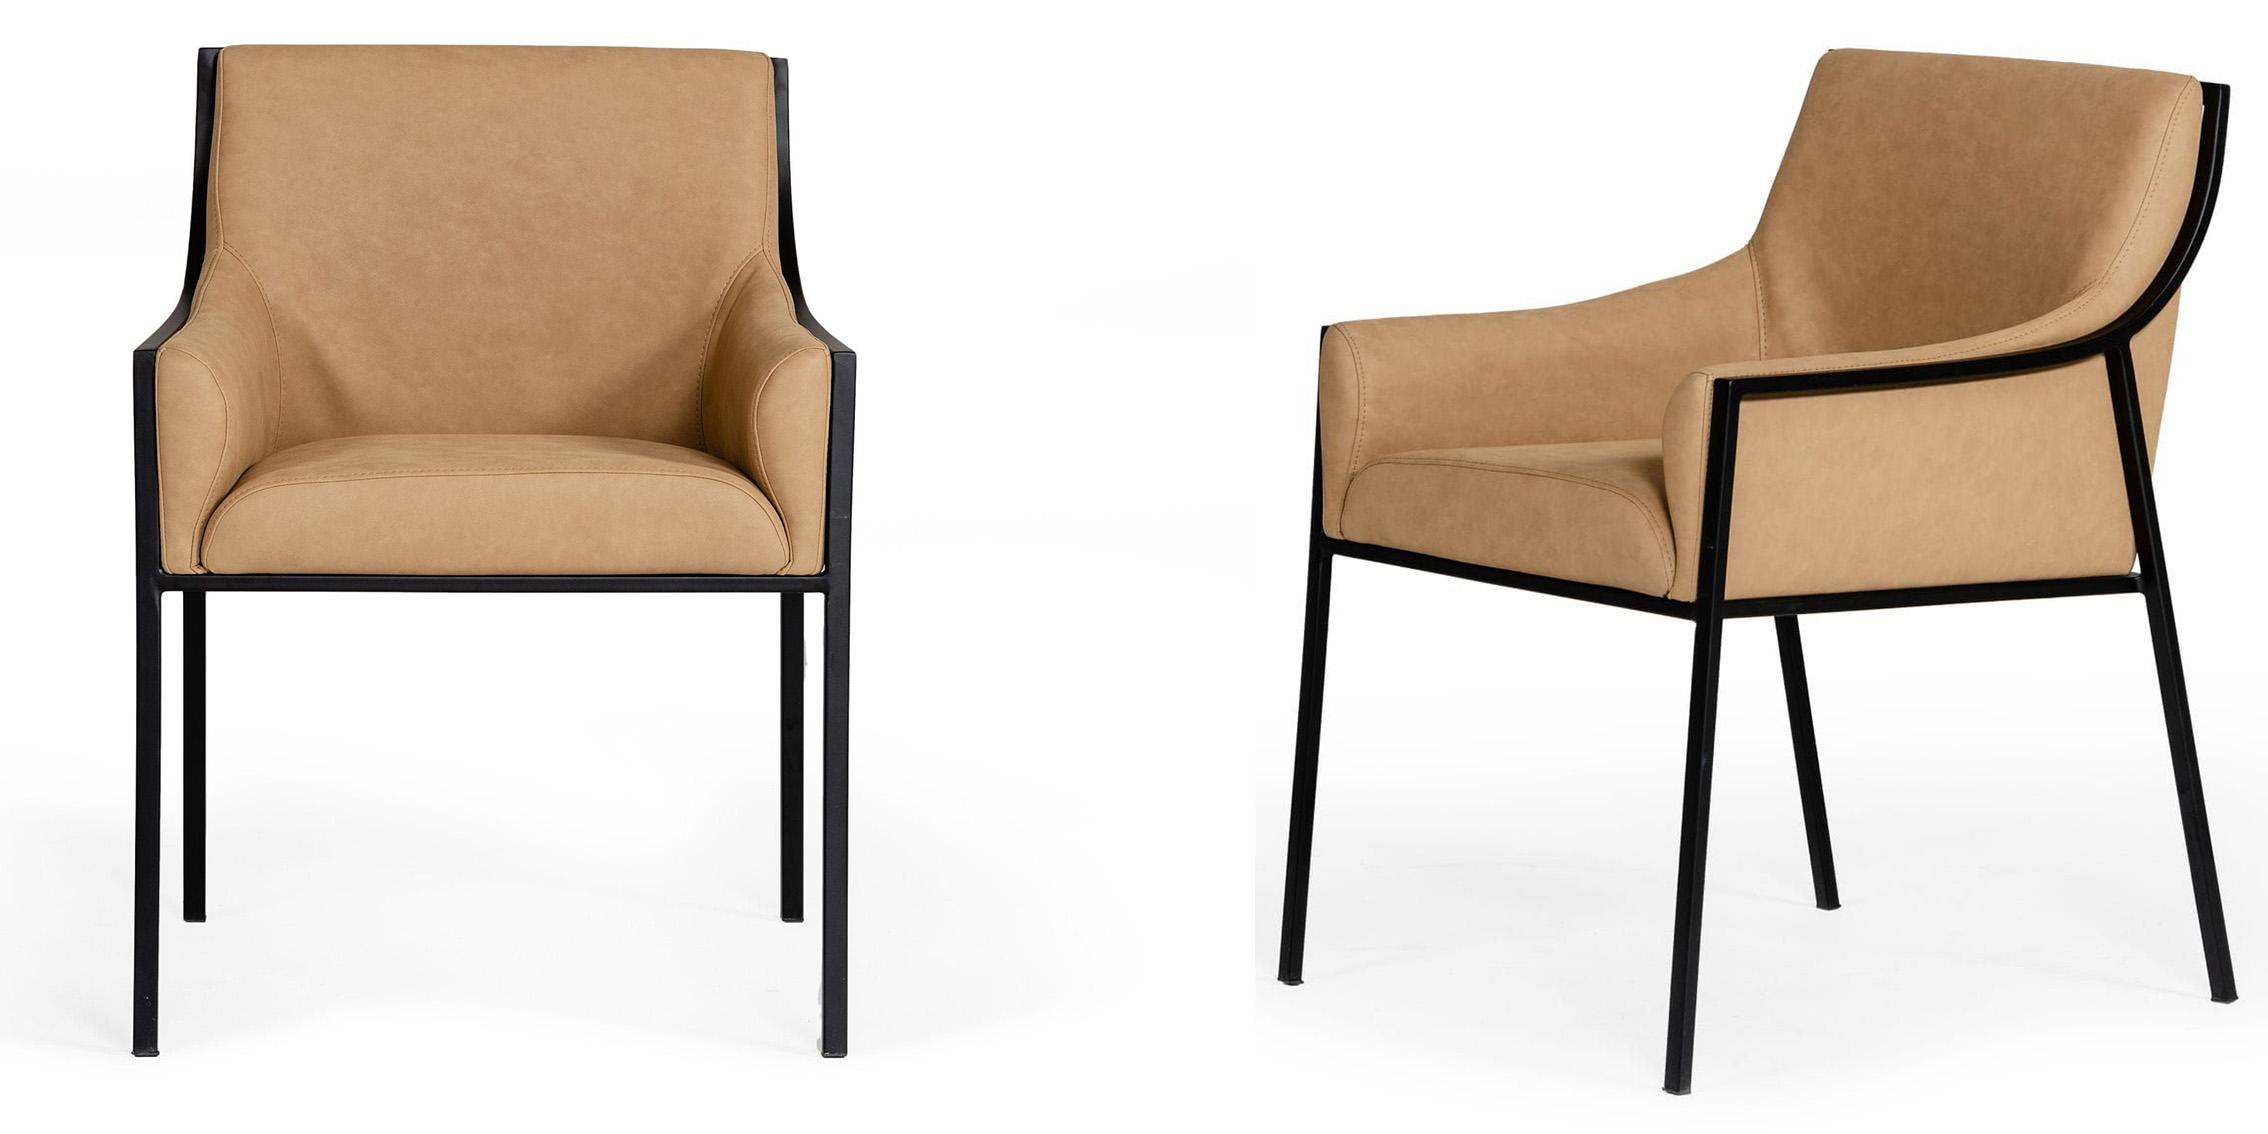 

    
Suede Tan Dining Chair Set 2Pcs Modrest Raul VIG Modern Contemporary
